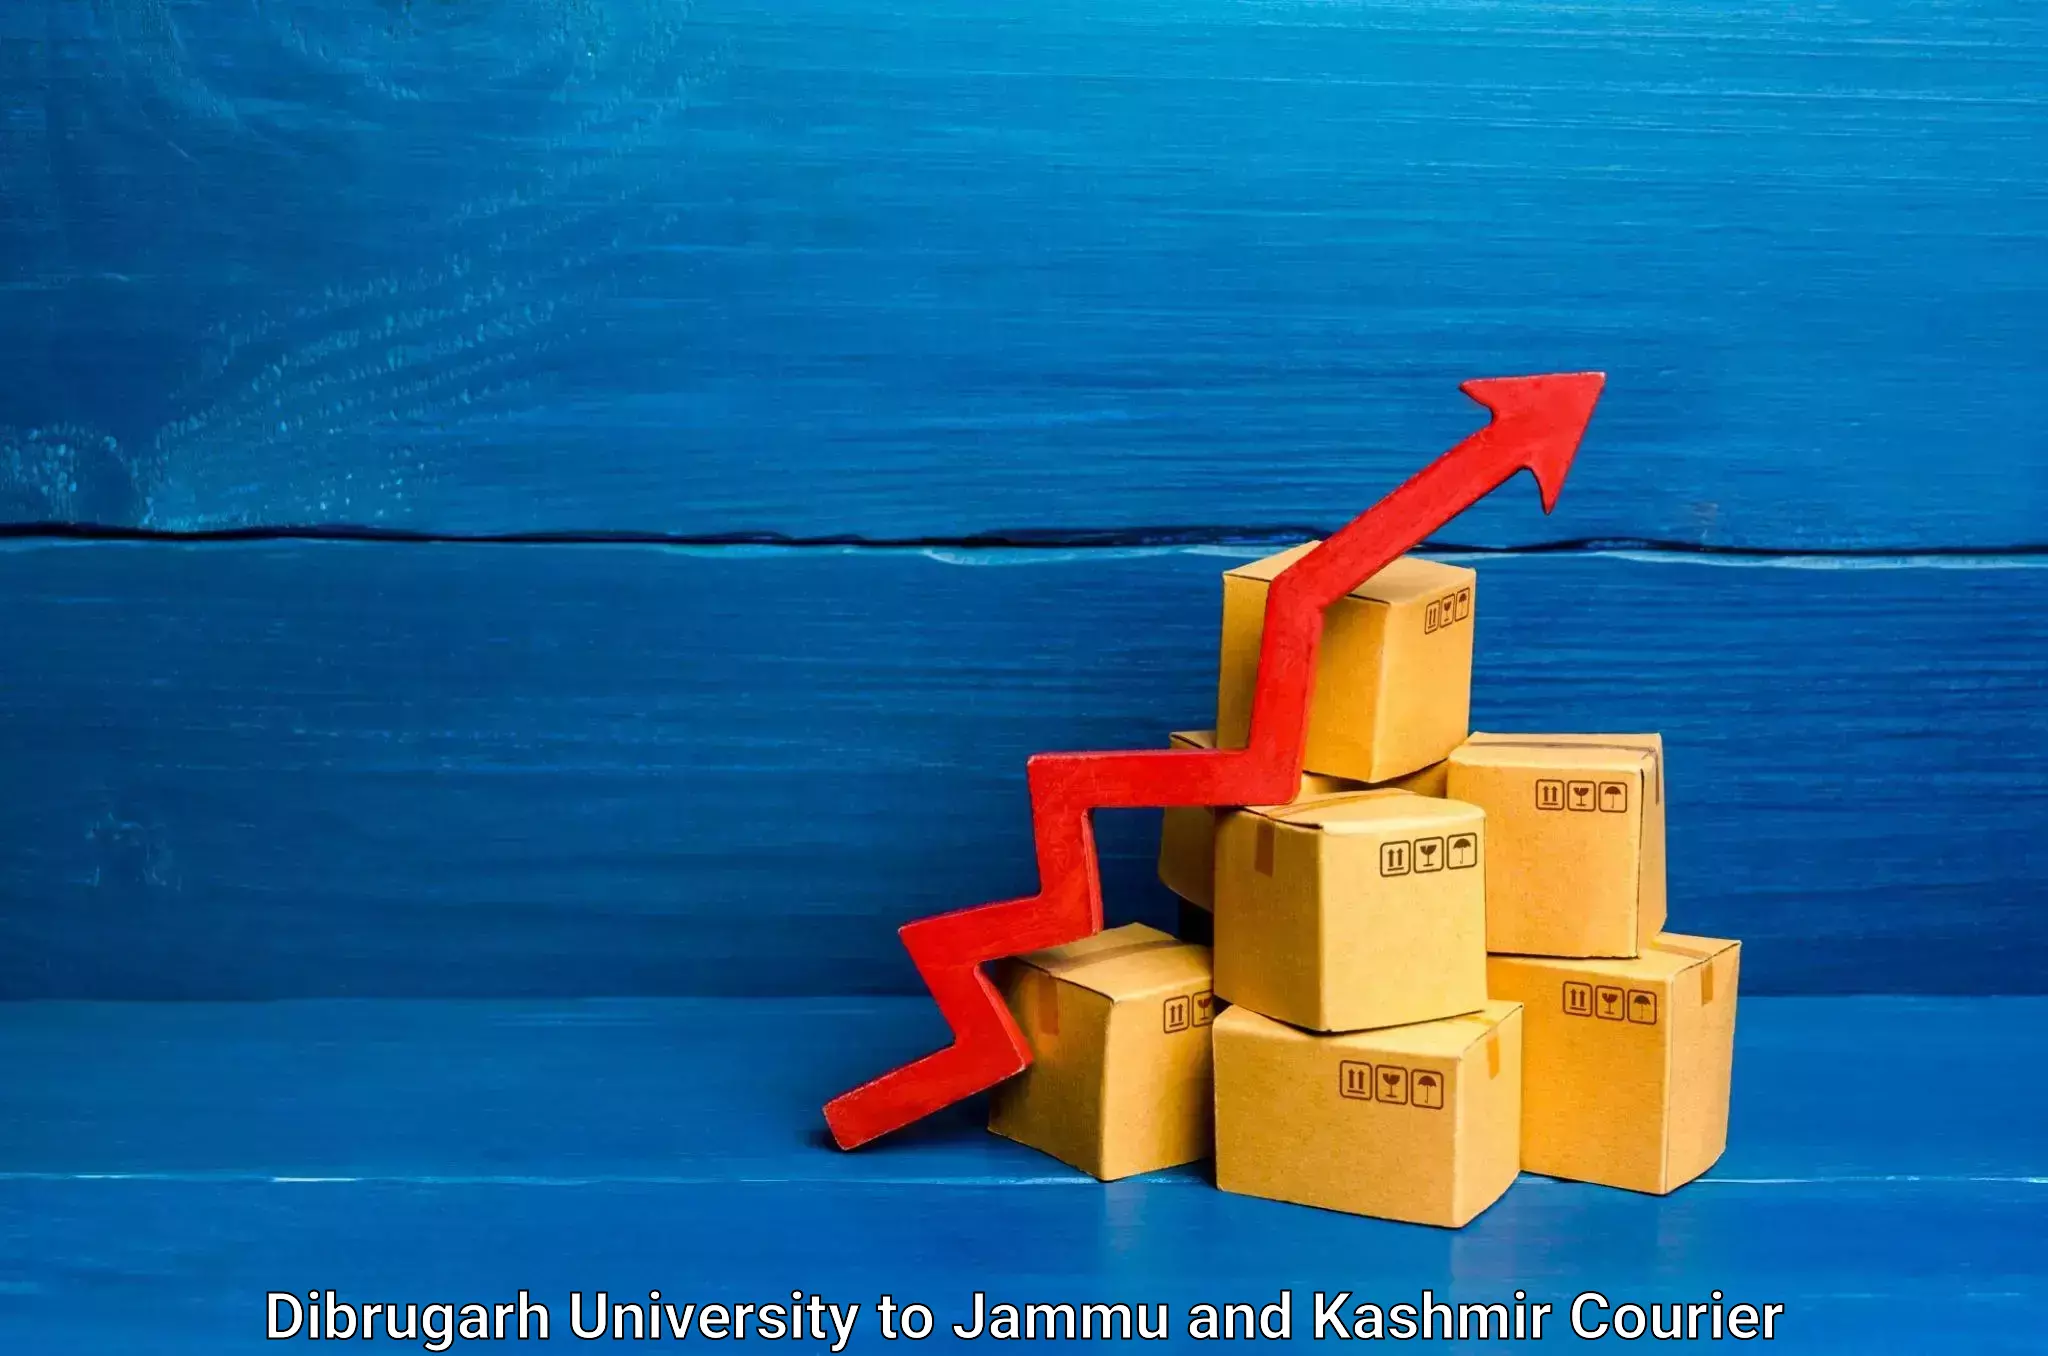 Courier services Dibrugarh University to University of Jammu